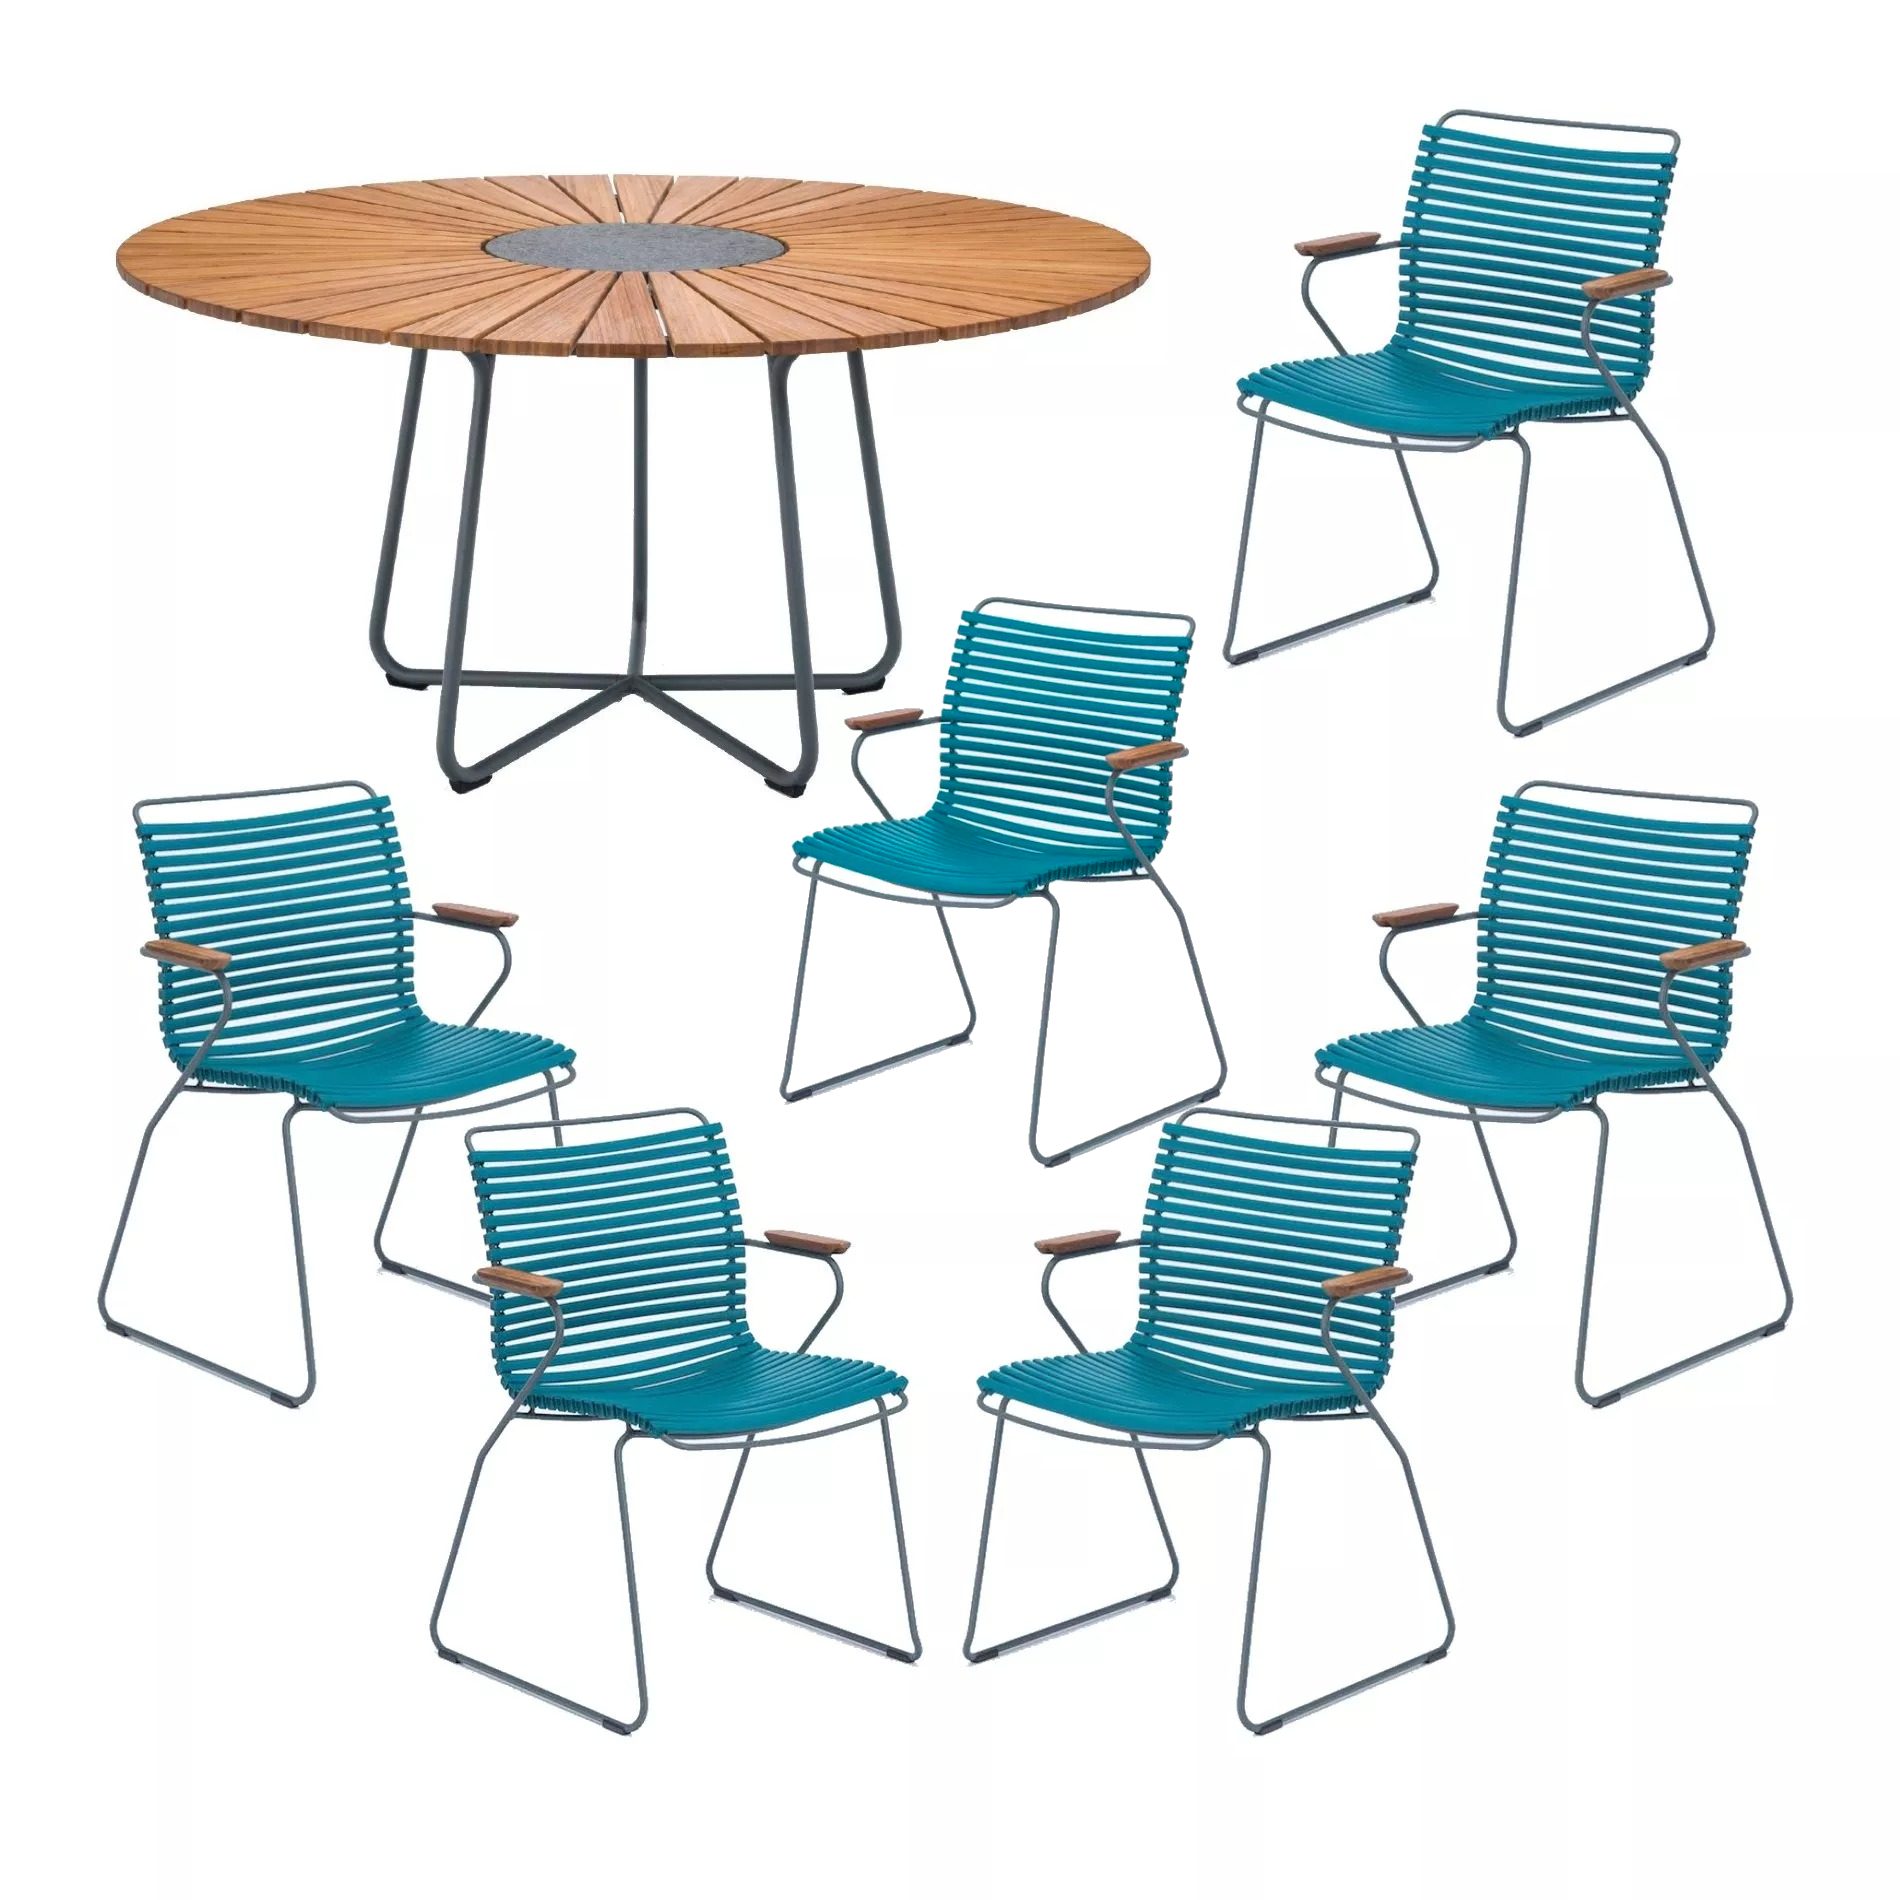 Houe Gartenmöbel-Set mit Tisch "Circle" Ø 150 cm und 6x Stapelsessel "Click", Lamellen petrol, Tischplatte Bambus